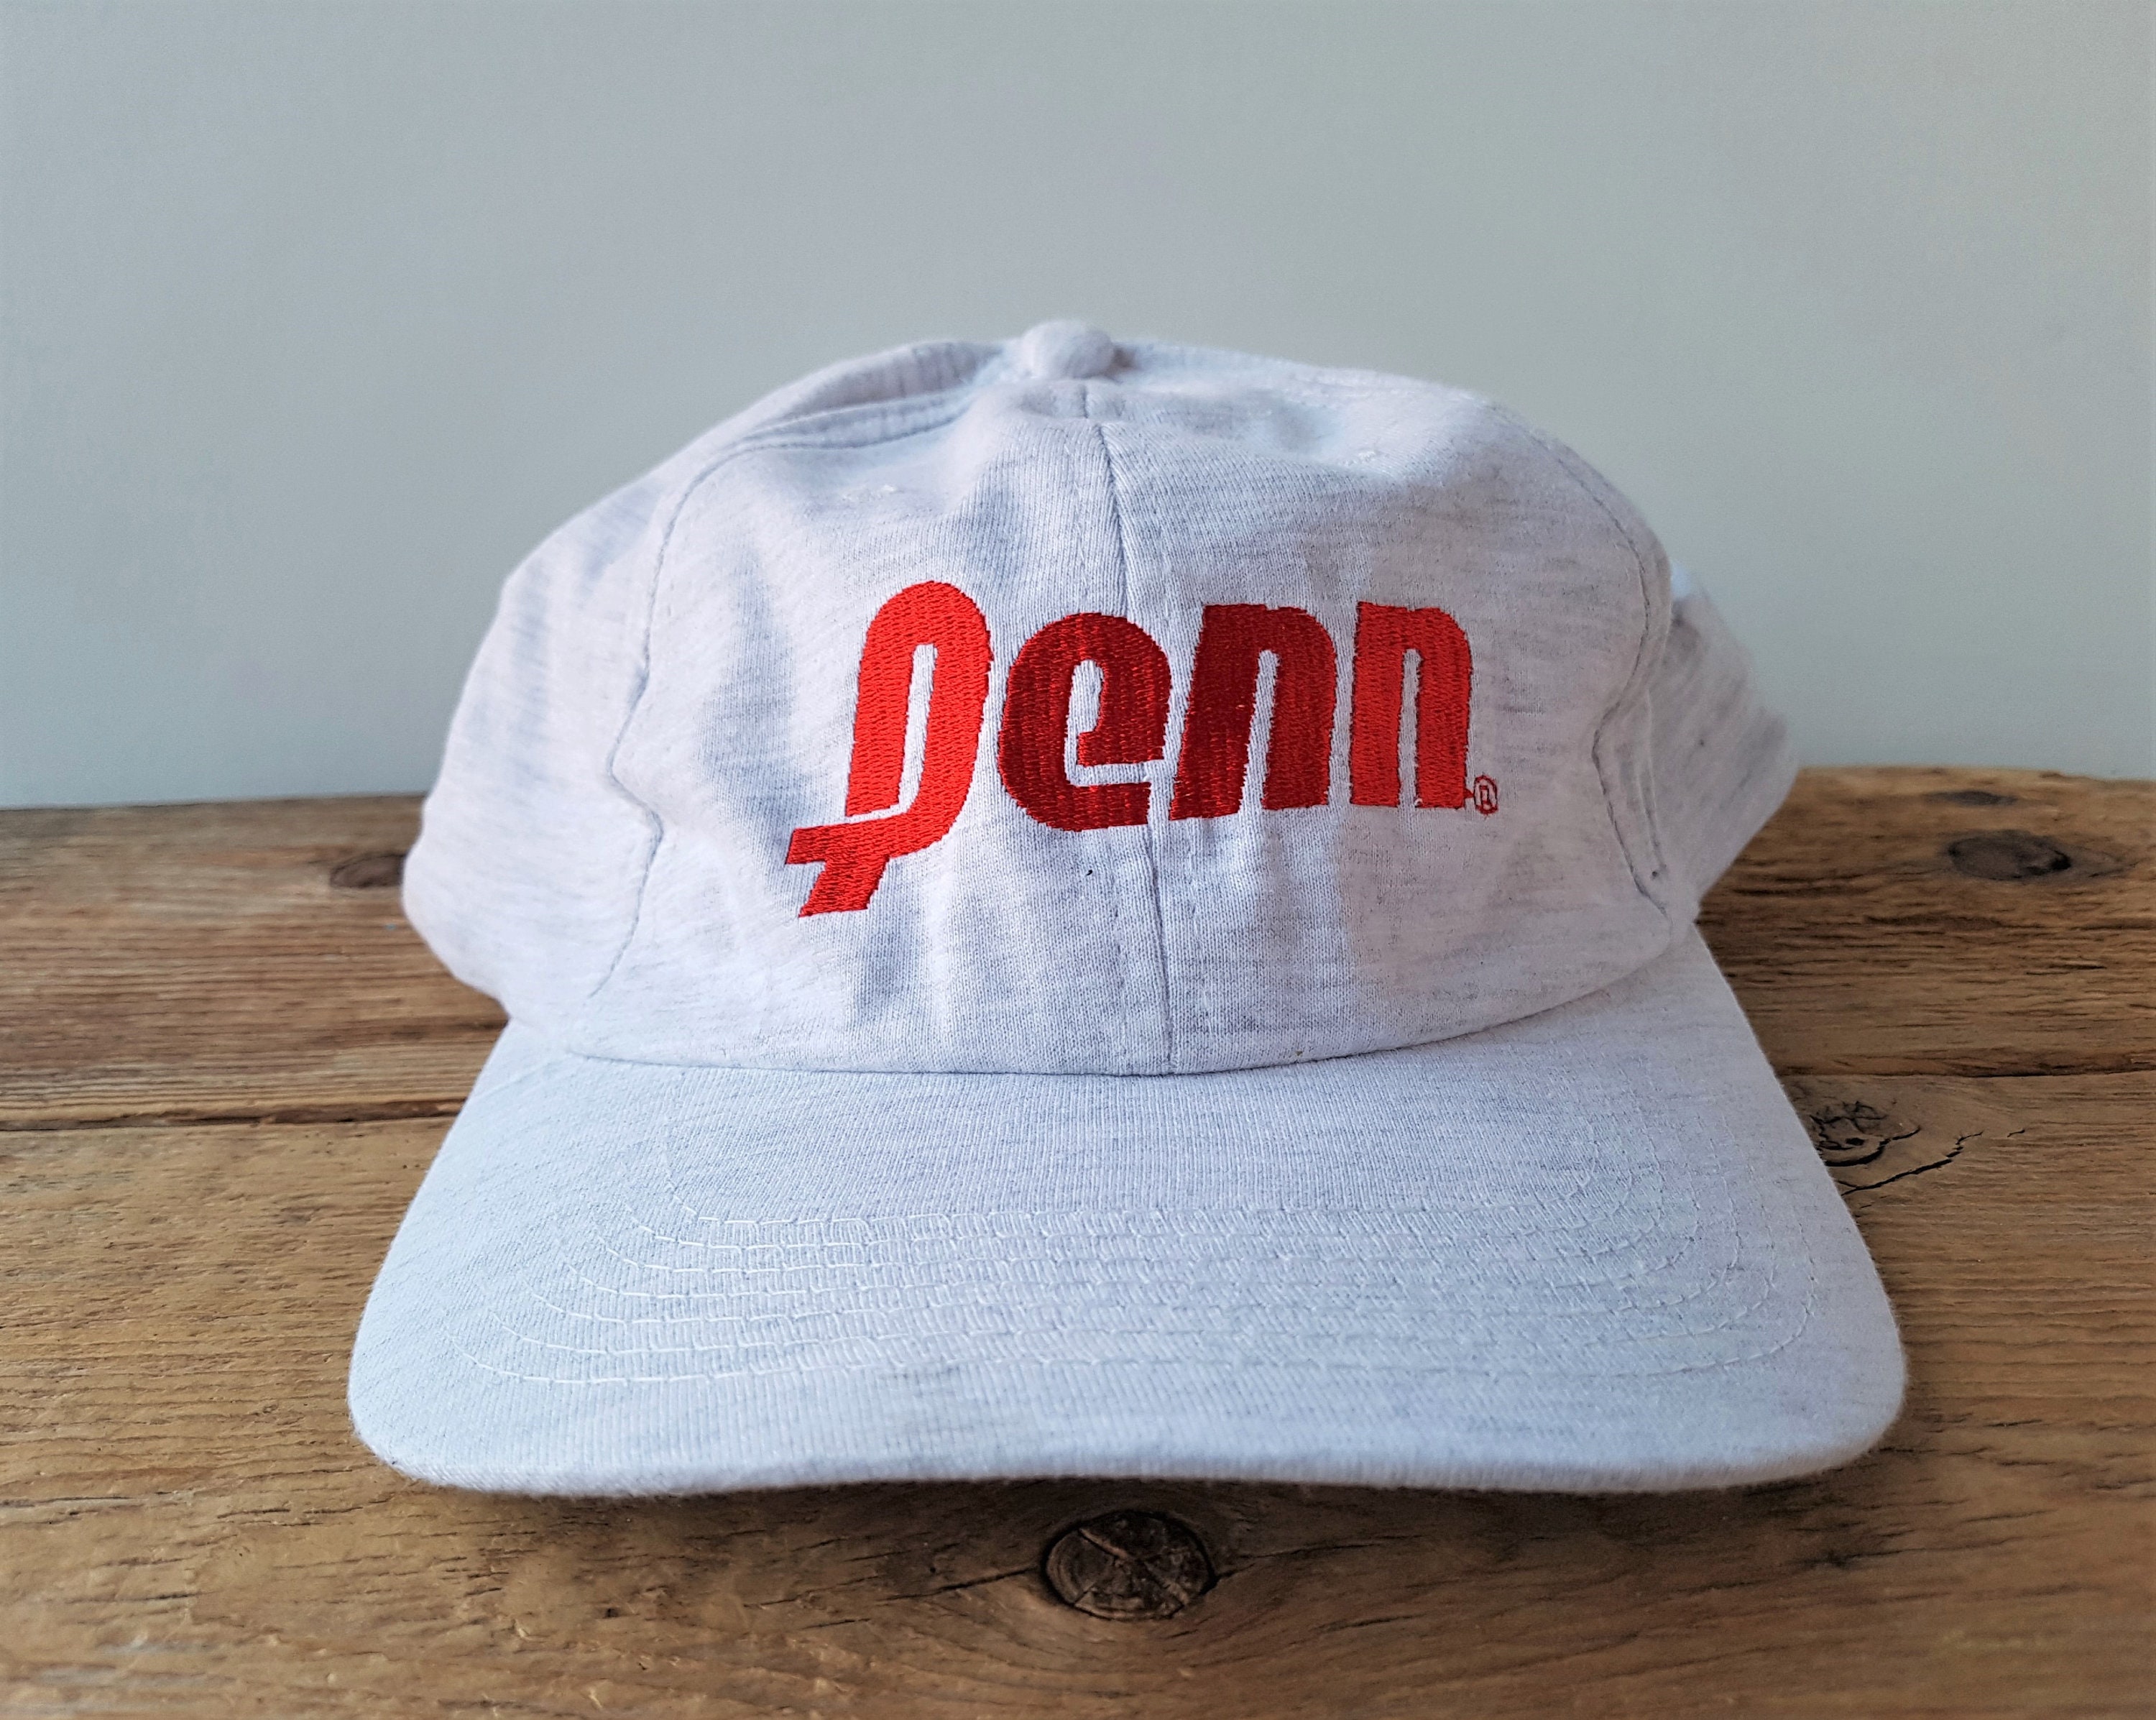 Buy Penn Fishing Hat Online In India -  India